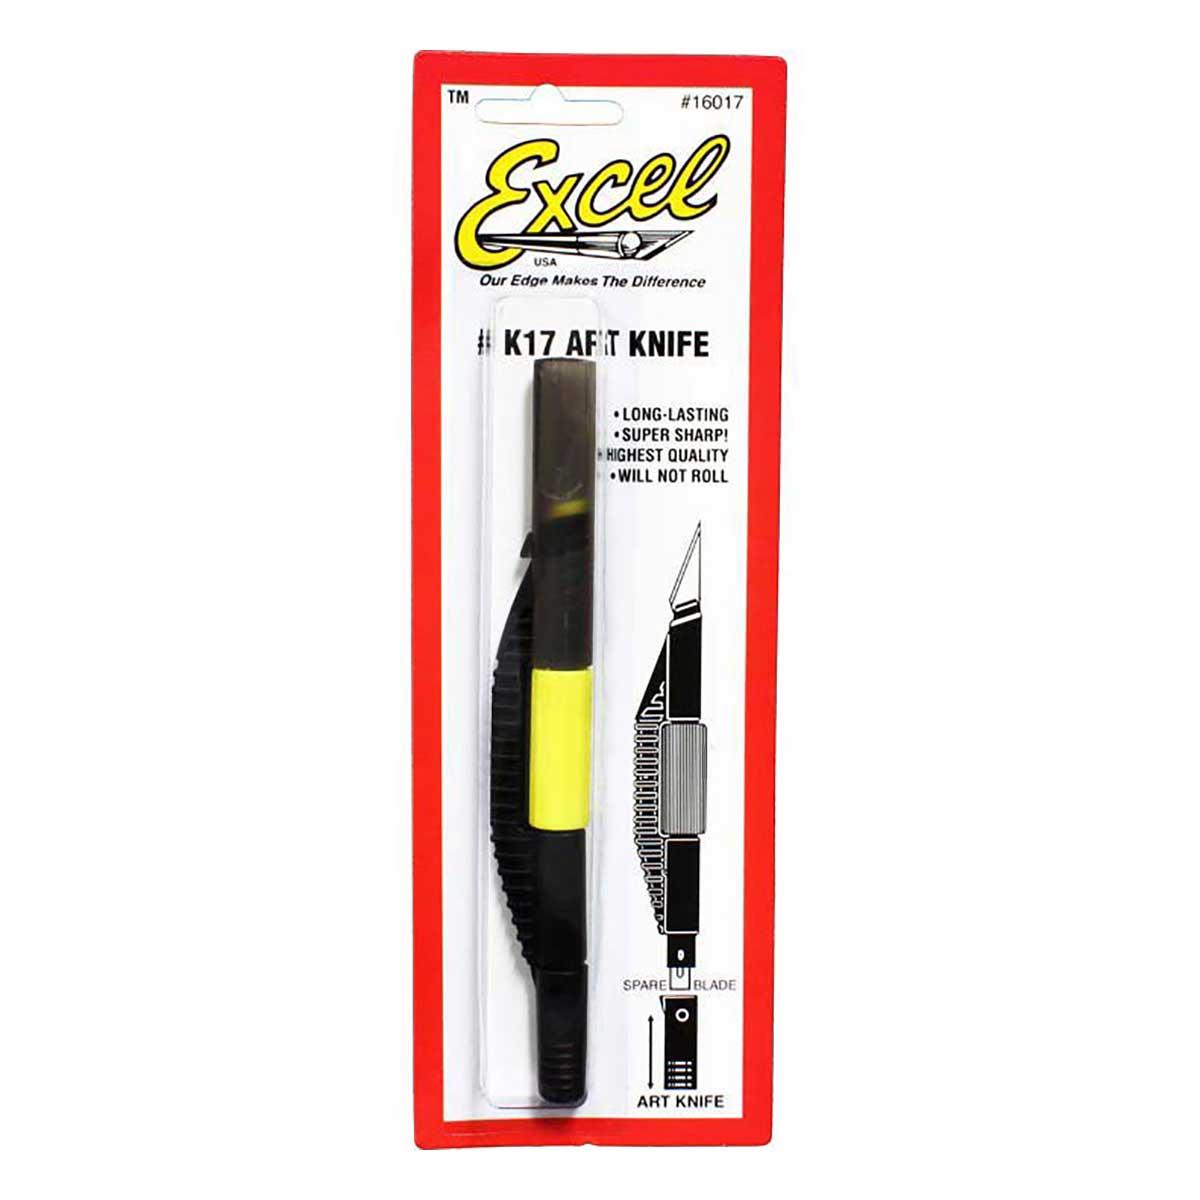 Excel K17 No Roll Art Knife USA - 16017